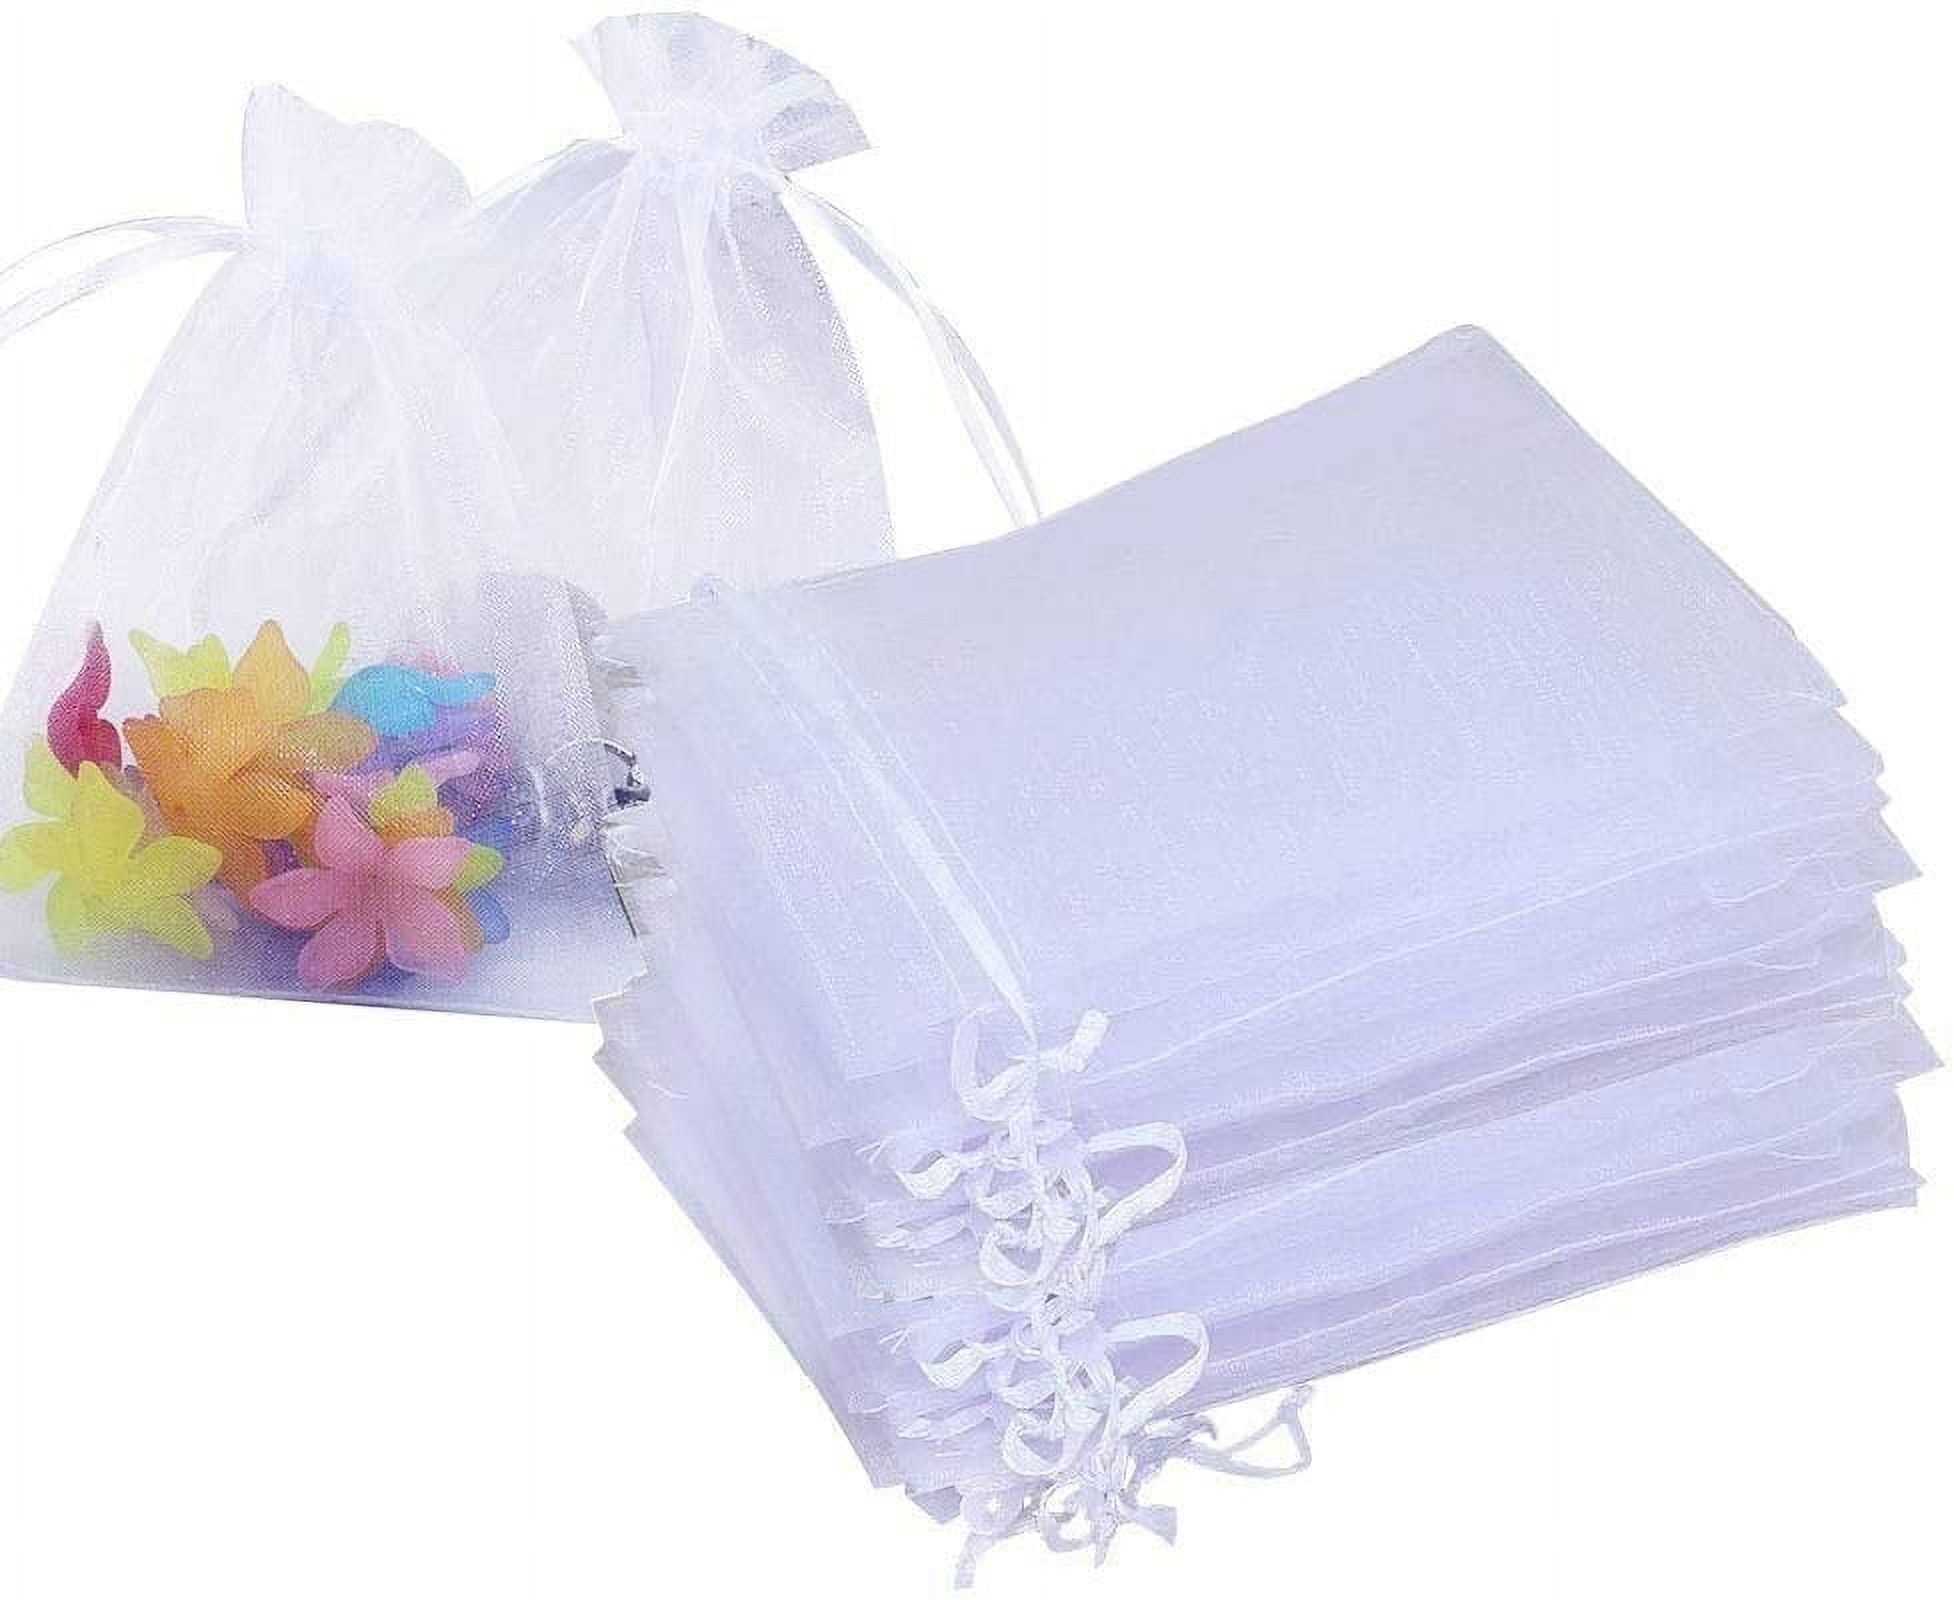 Kslong 100PCS Small Mesh Bags Drawstring 3x4,Sheer Organza Bags Drawstring  for Jewelry, Mesh Party Wedding Favor Bags for Small